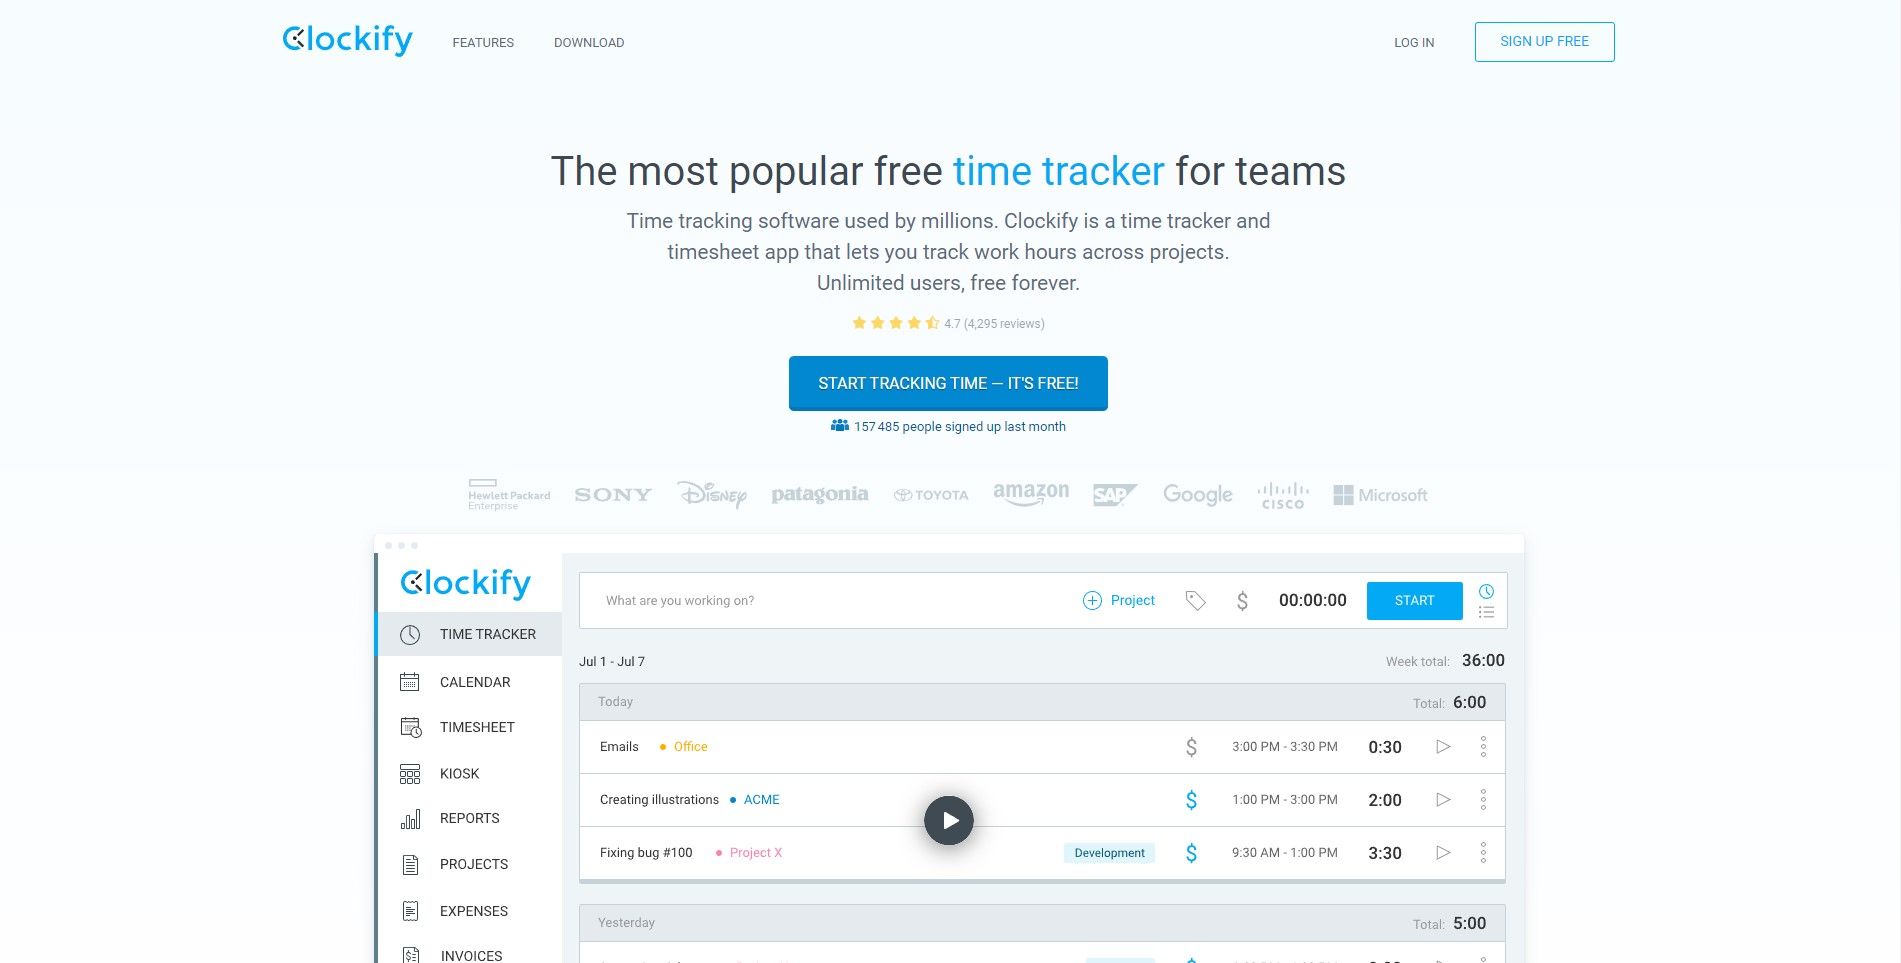 Clockify website homepage screenshot